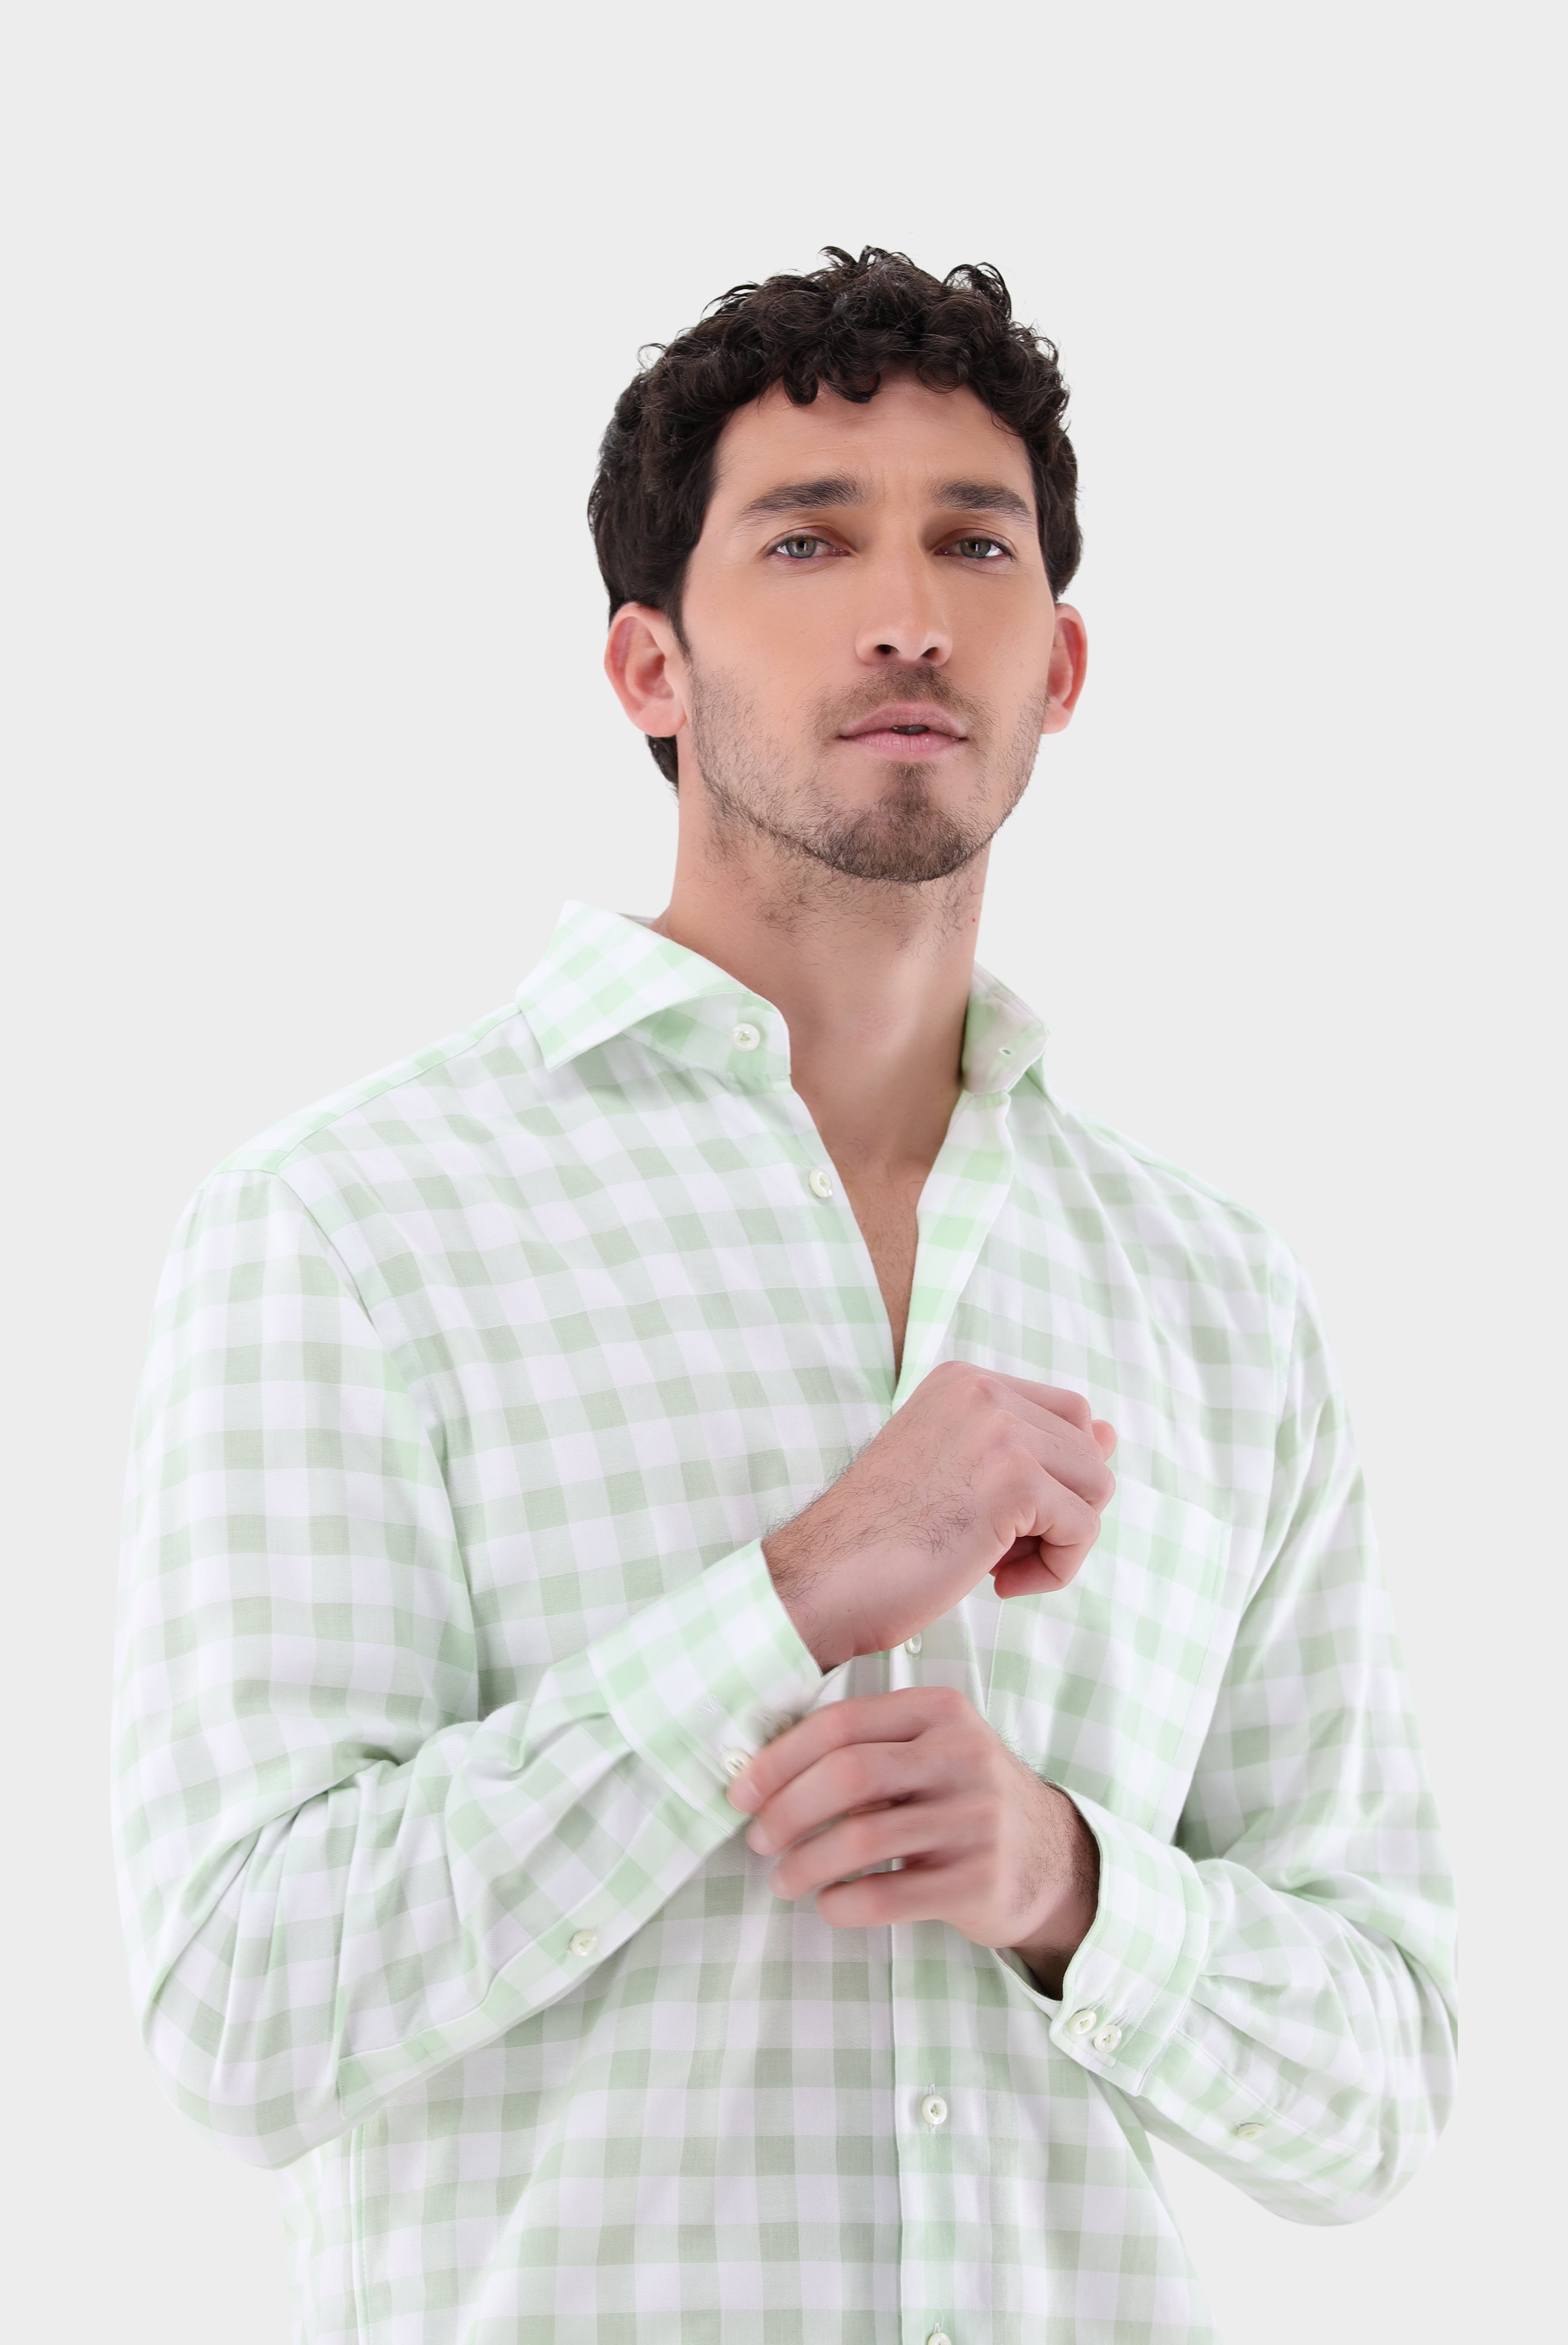 Casual Shirts+Checked twill shirt Comfort Fit+20.2021.AV.151021.910.39